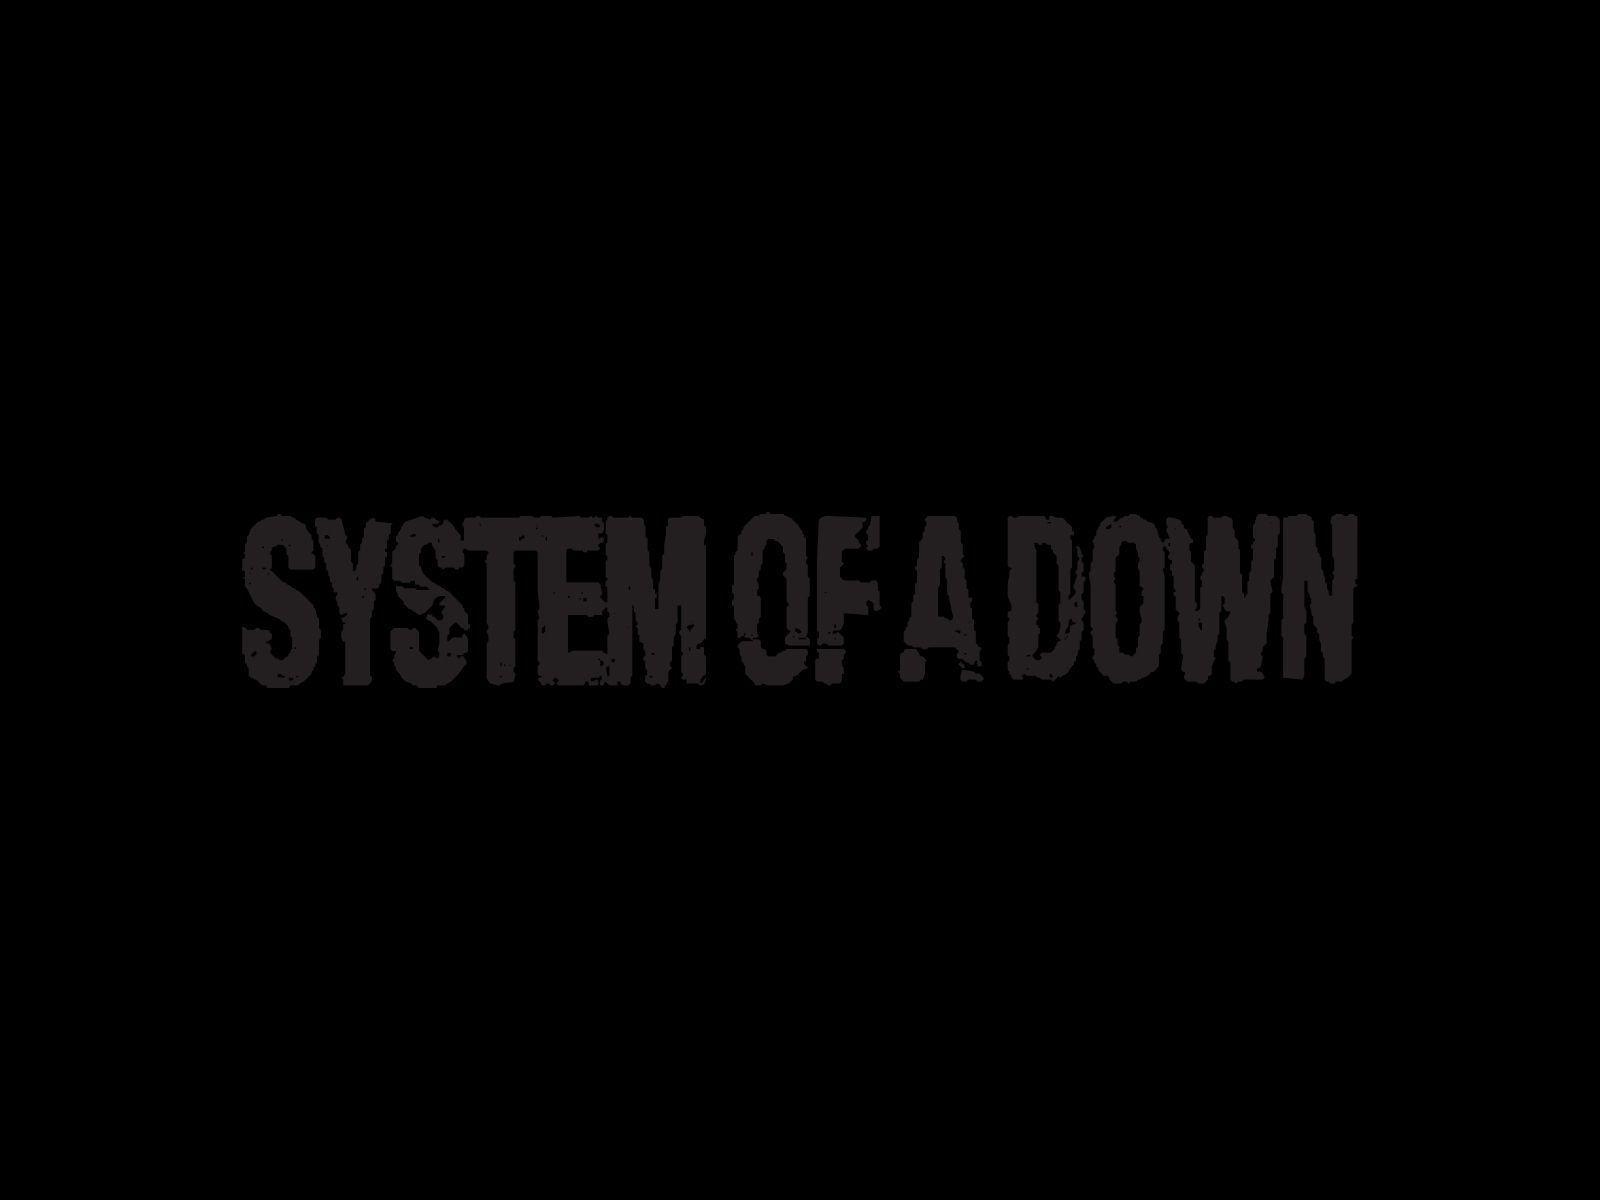 System of a down. Band logos band logos, metal bands logos